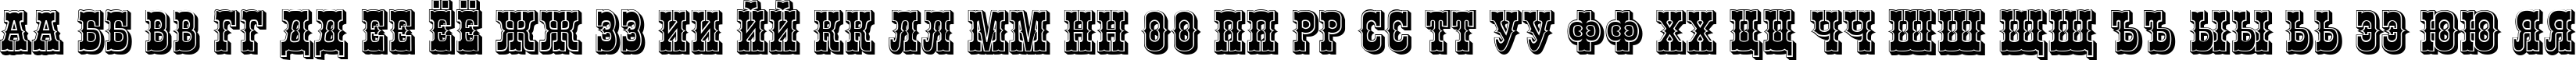 Пример написания русского алфавита шрифтом Chibola Shaded